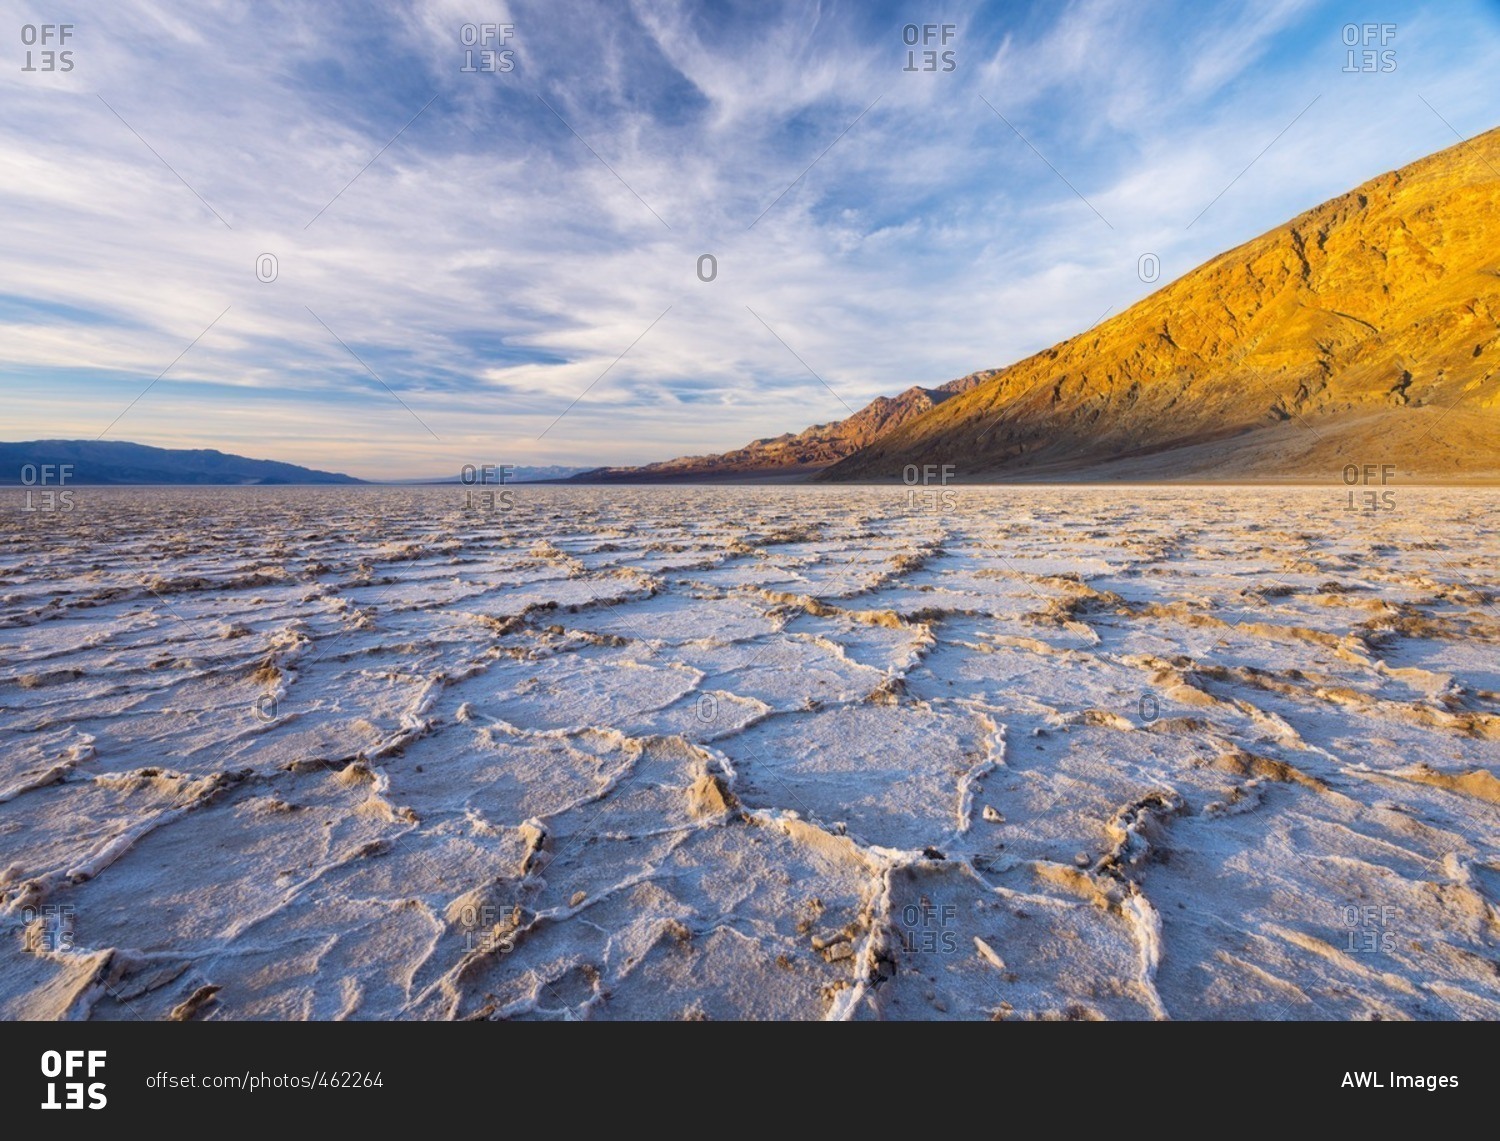 USA, California, Death Valley National Park, Badwater Basin, lowest point in North America, salt crust broken into hexagonal pressure ridges